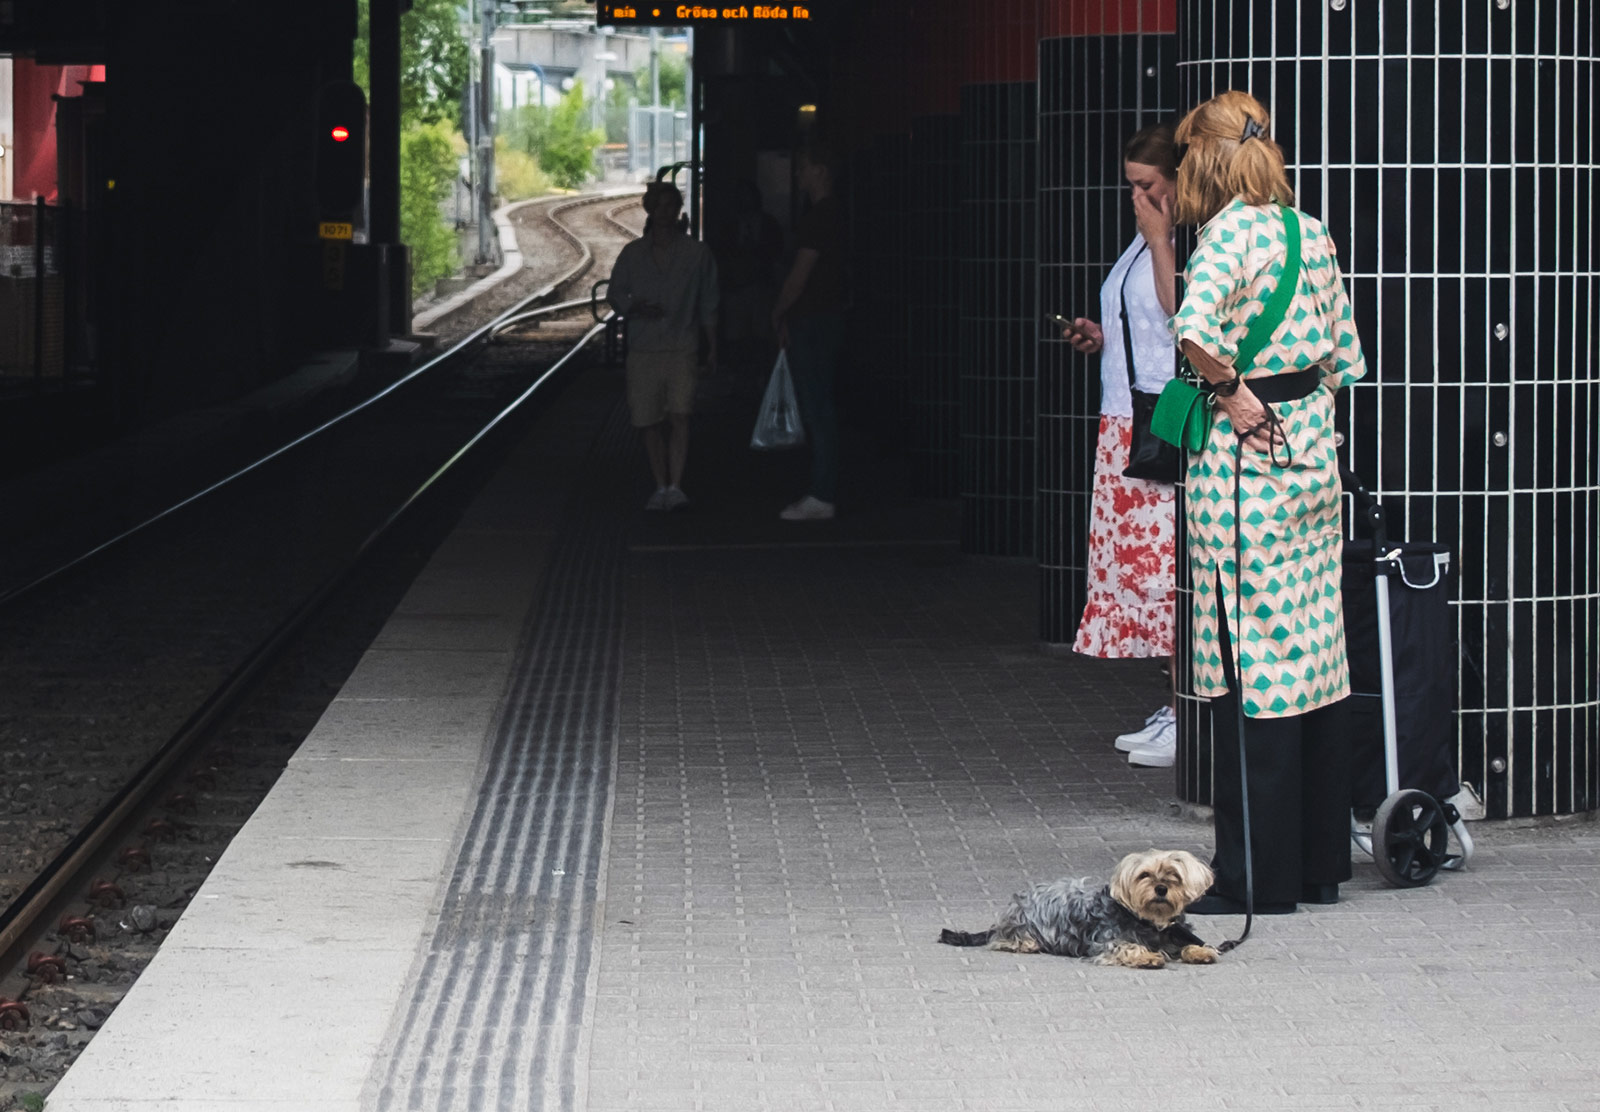 Dog sat on train platform